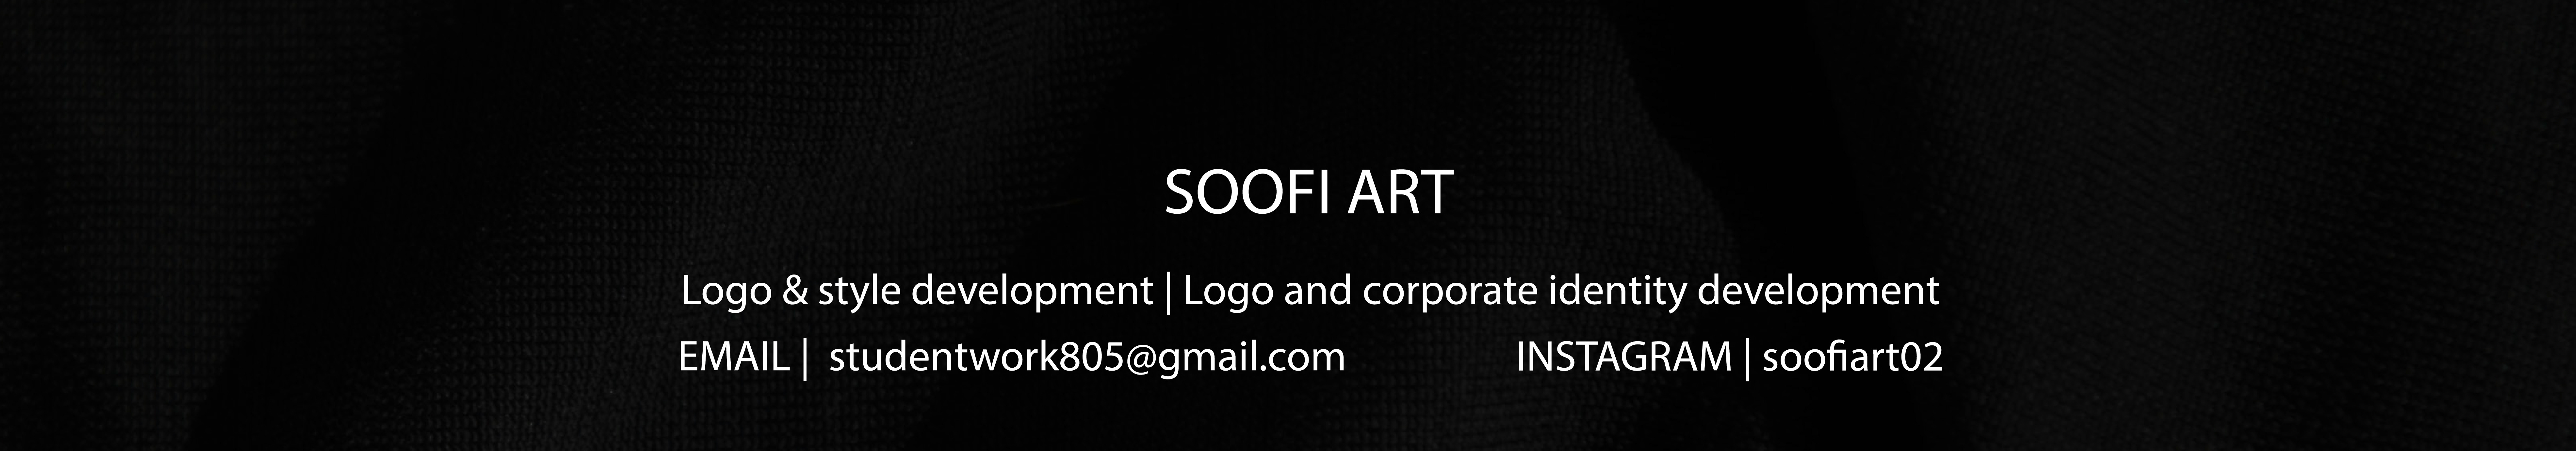 Soofi Arts profilbanner